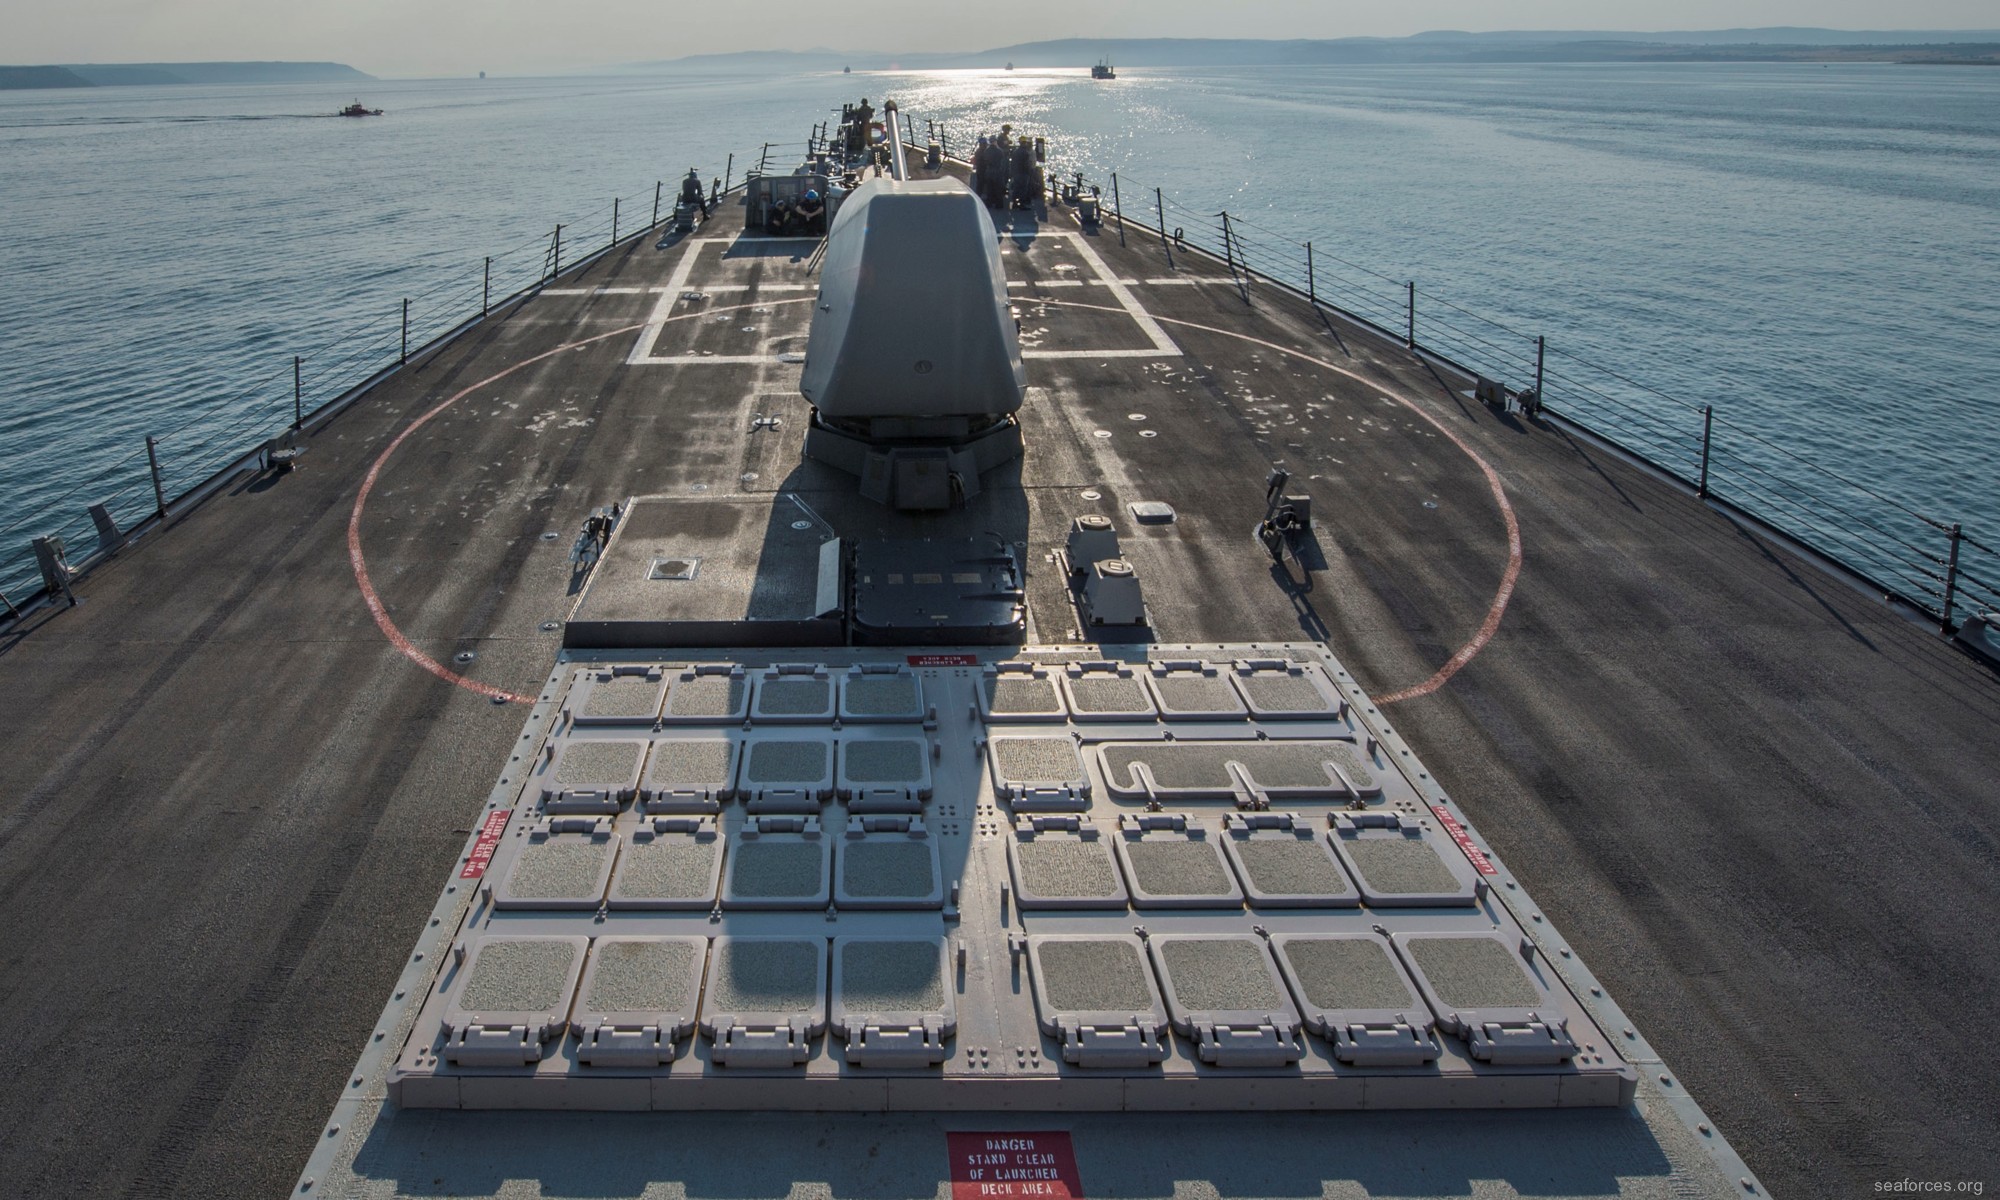 ddg-58 uss laboon guided missile destroyer us navy 15 dardanelles strait